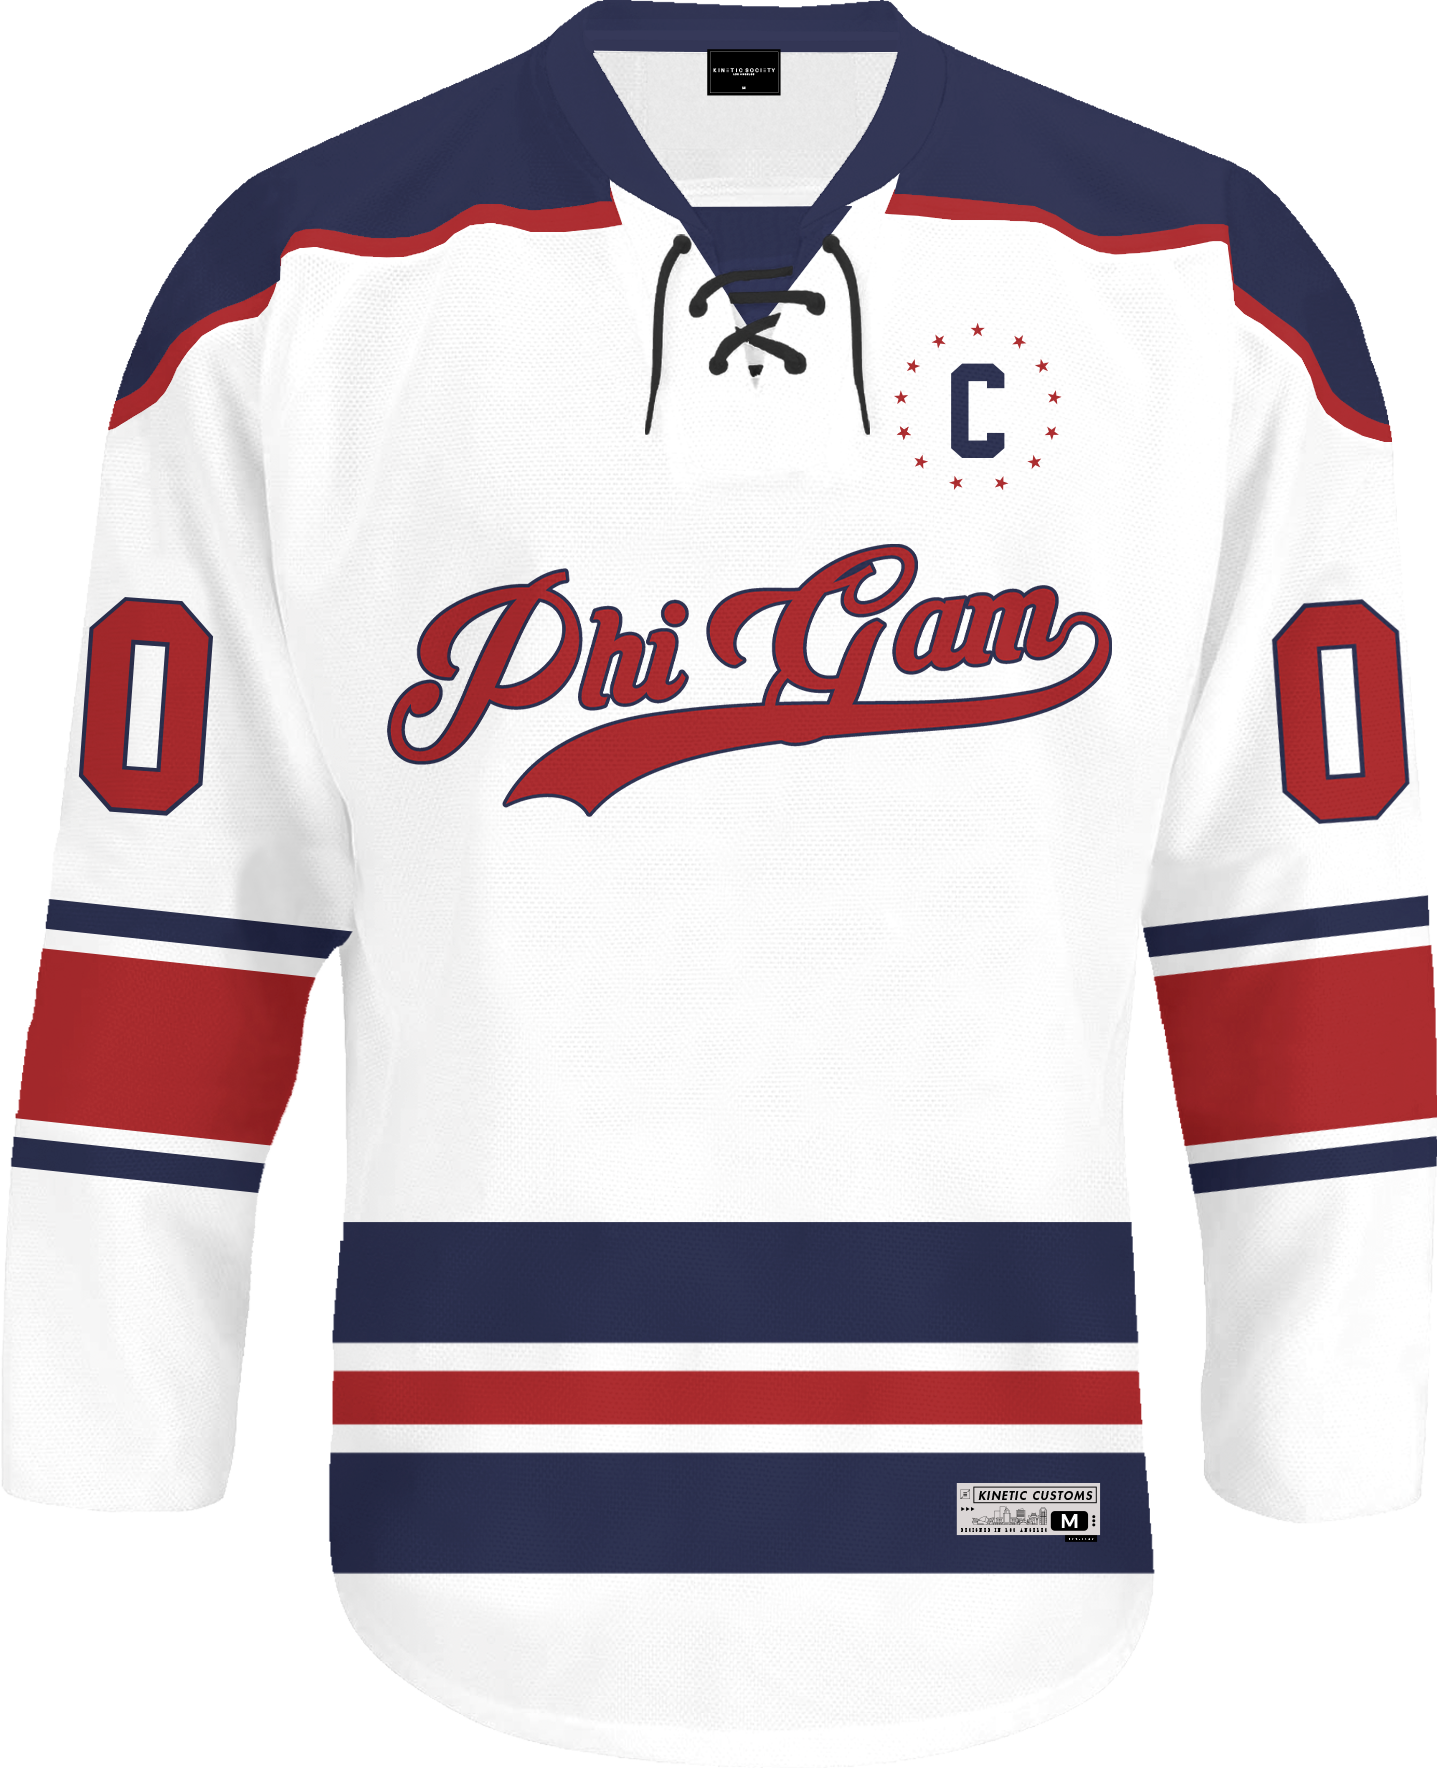 Regina Pats WHL jerseys